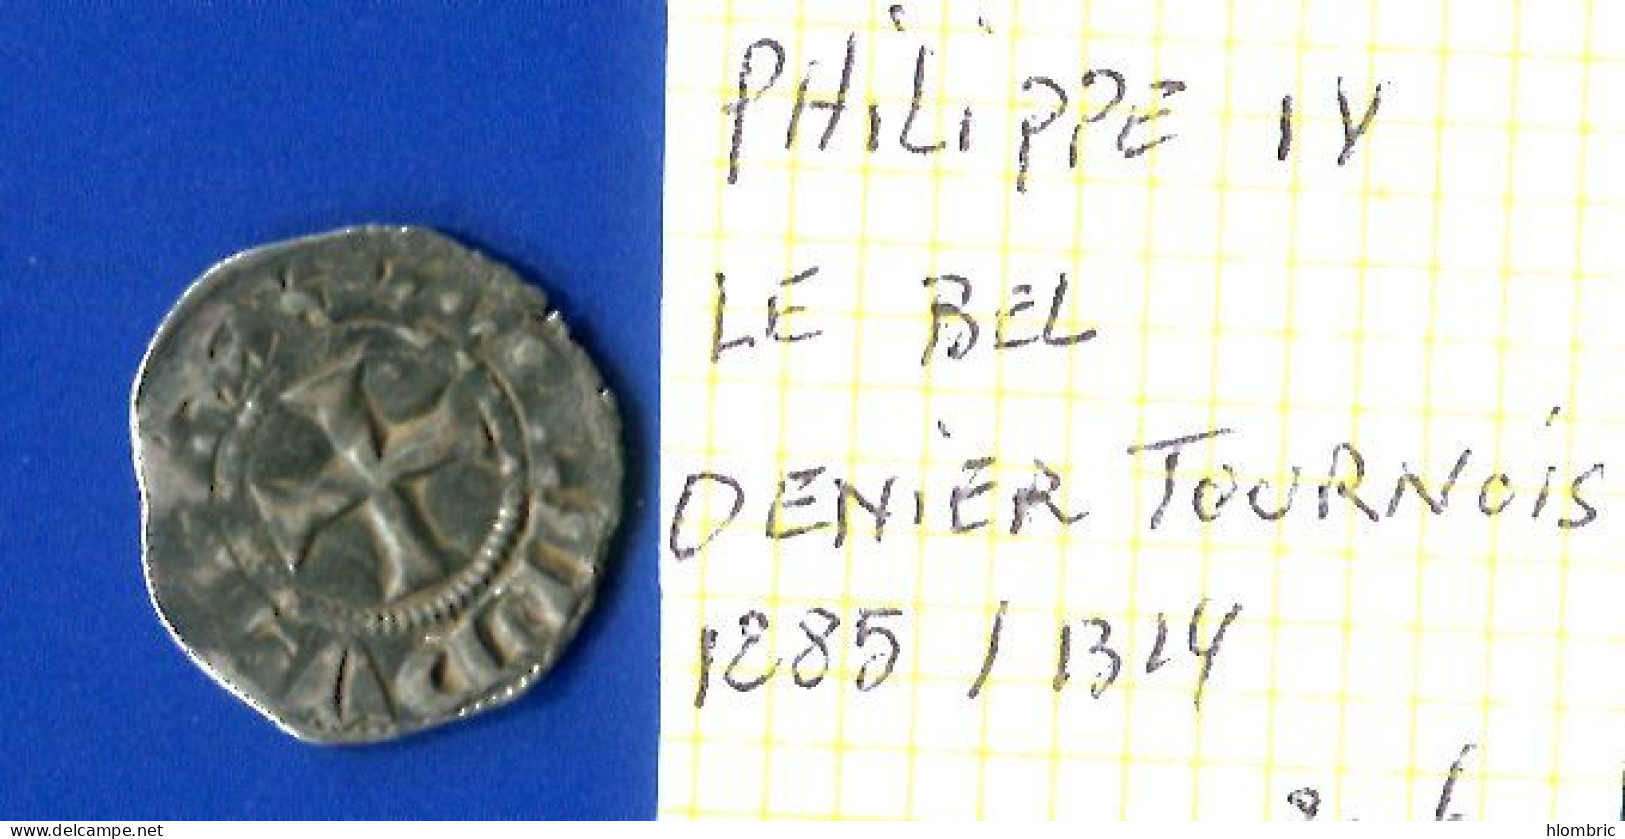 Philippe  Lv   Denier  Tournois  1285 /1314 - 1285-1314 Felipe IV El Hermoso